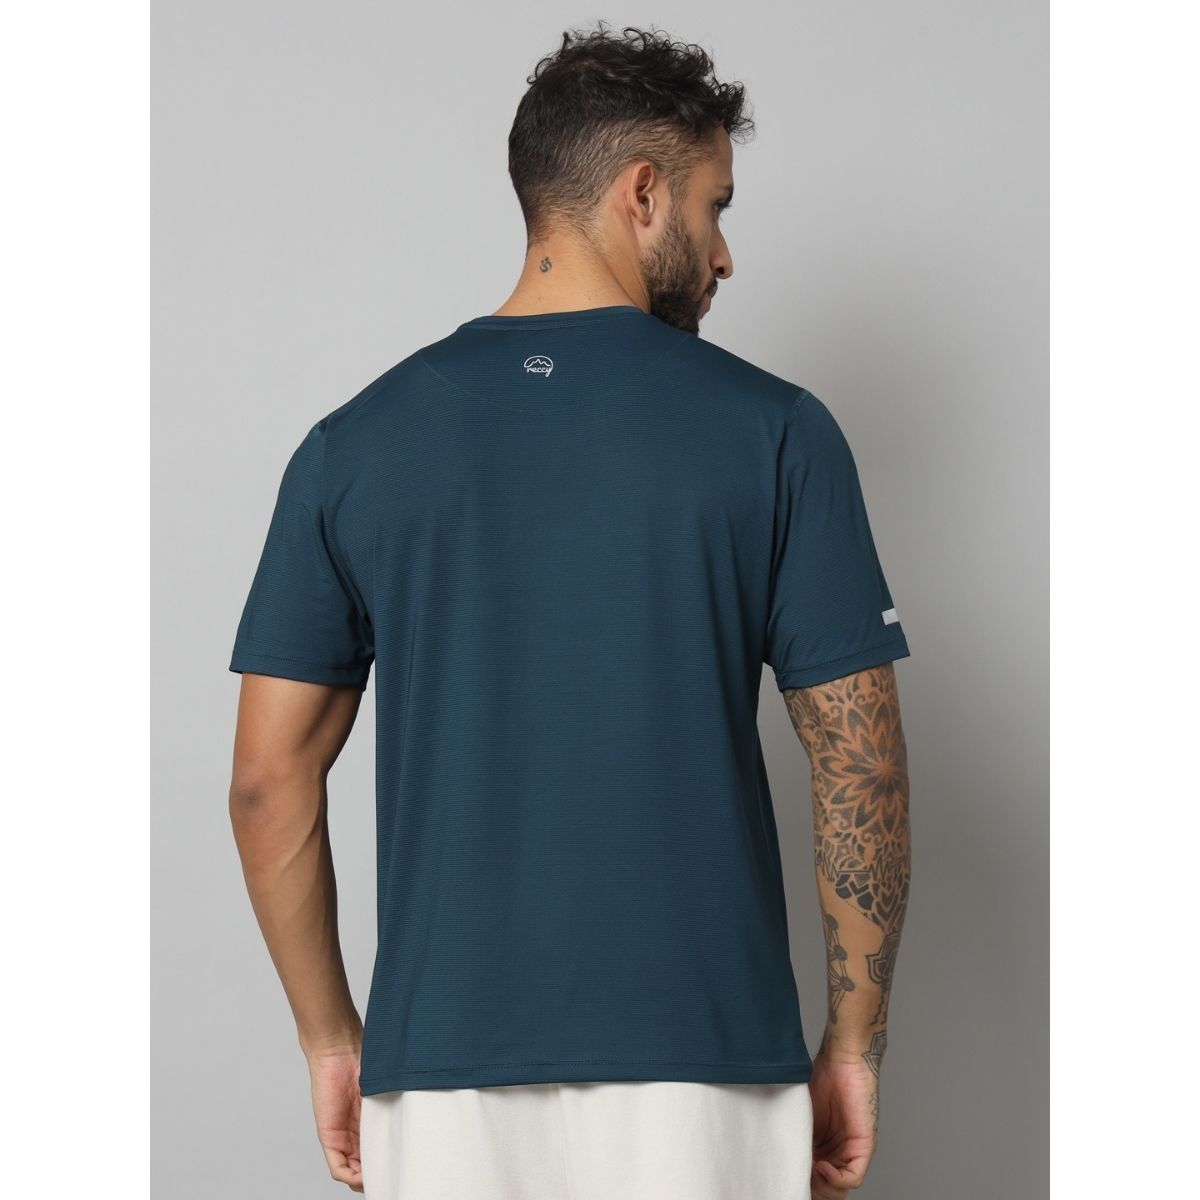 Men's Ultralight Athletic Half Sleeves T-Shirt - Pacific Blue 3